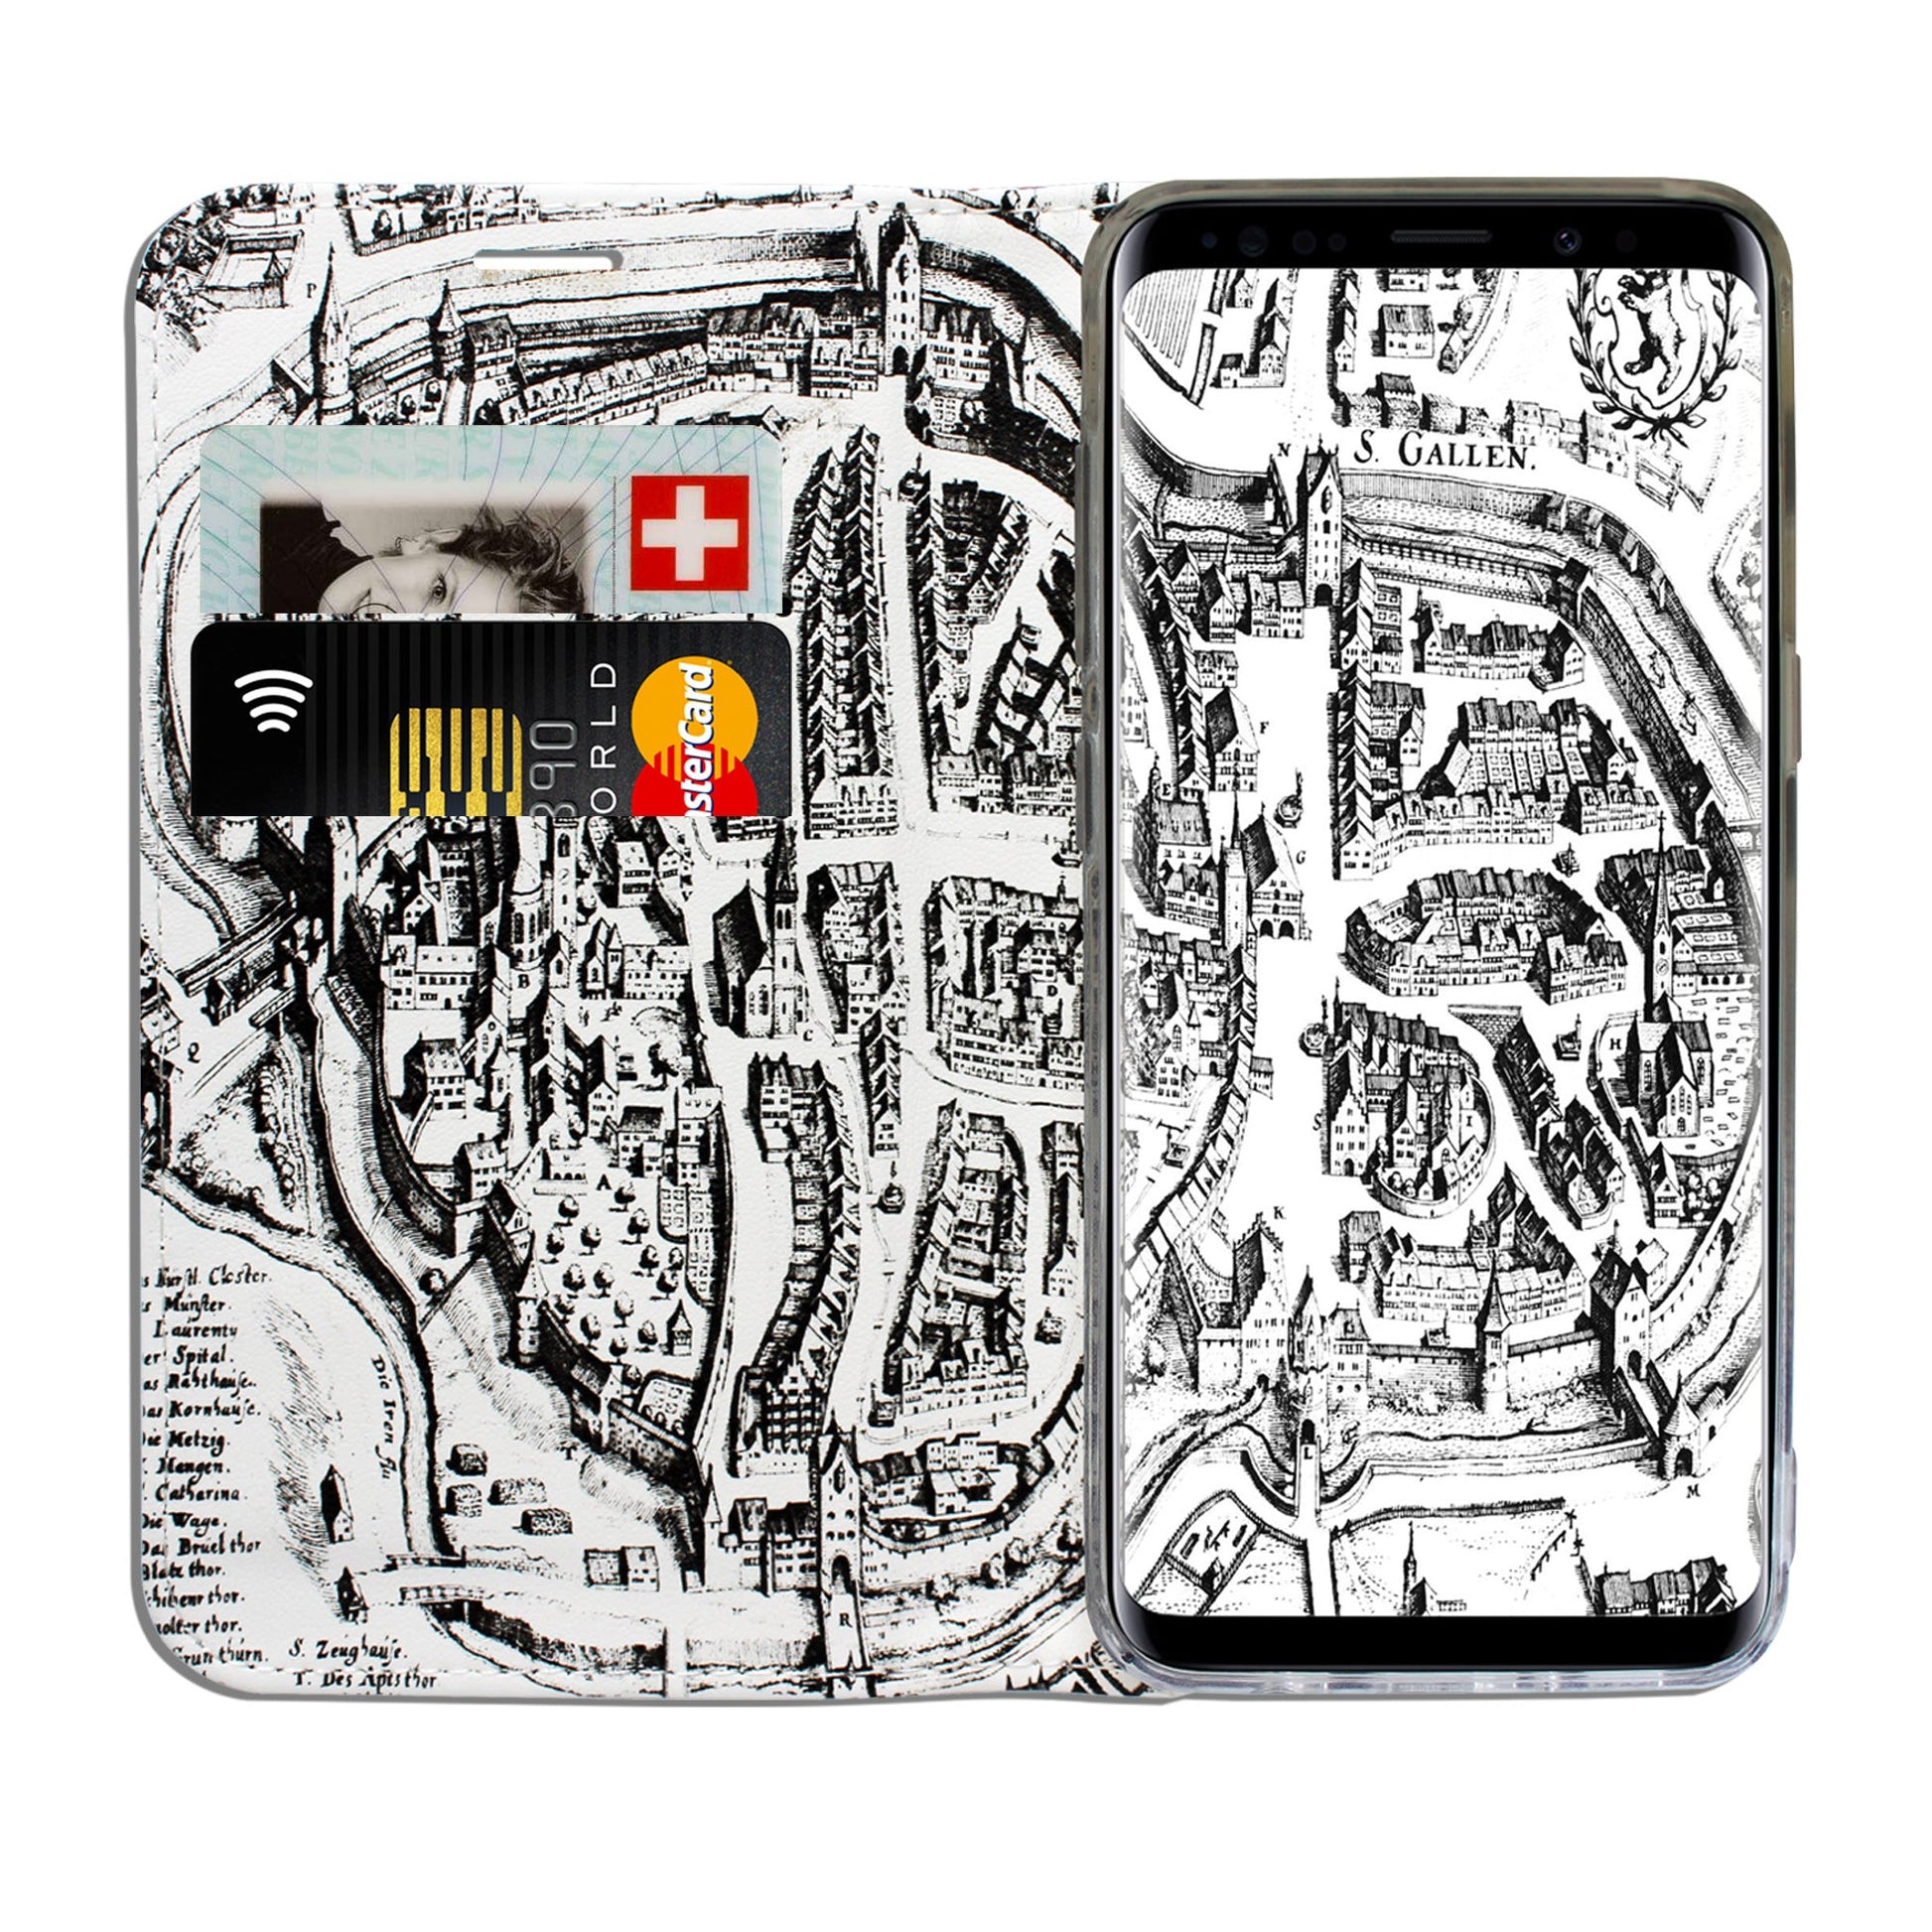 St. Gallen Merian Panorama Case for Samsung Galaxy S9 – modfreak